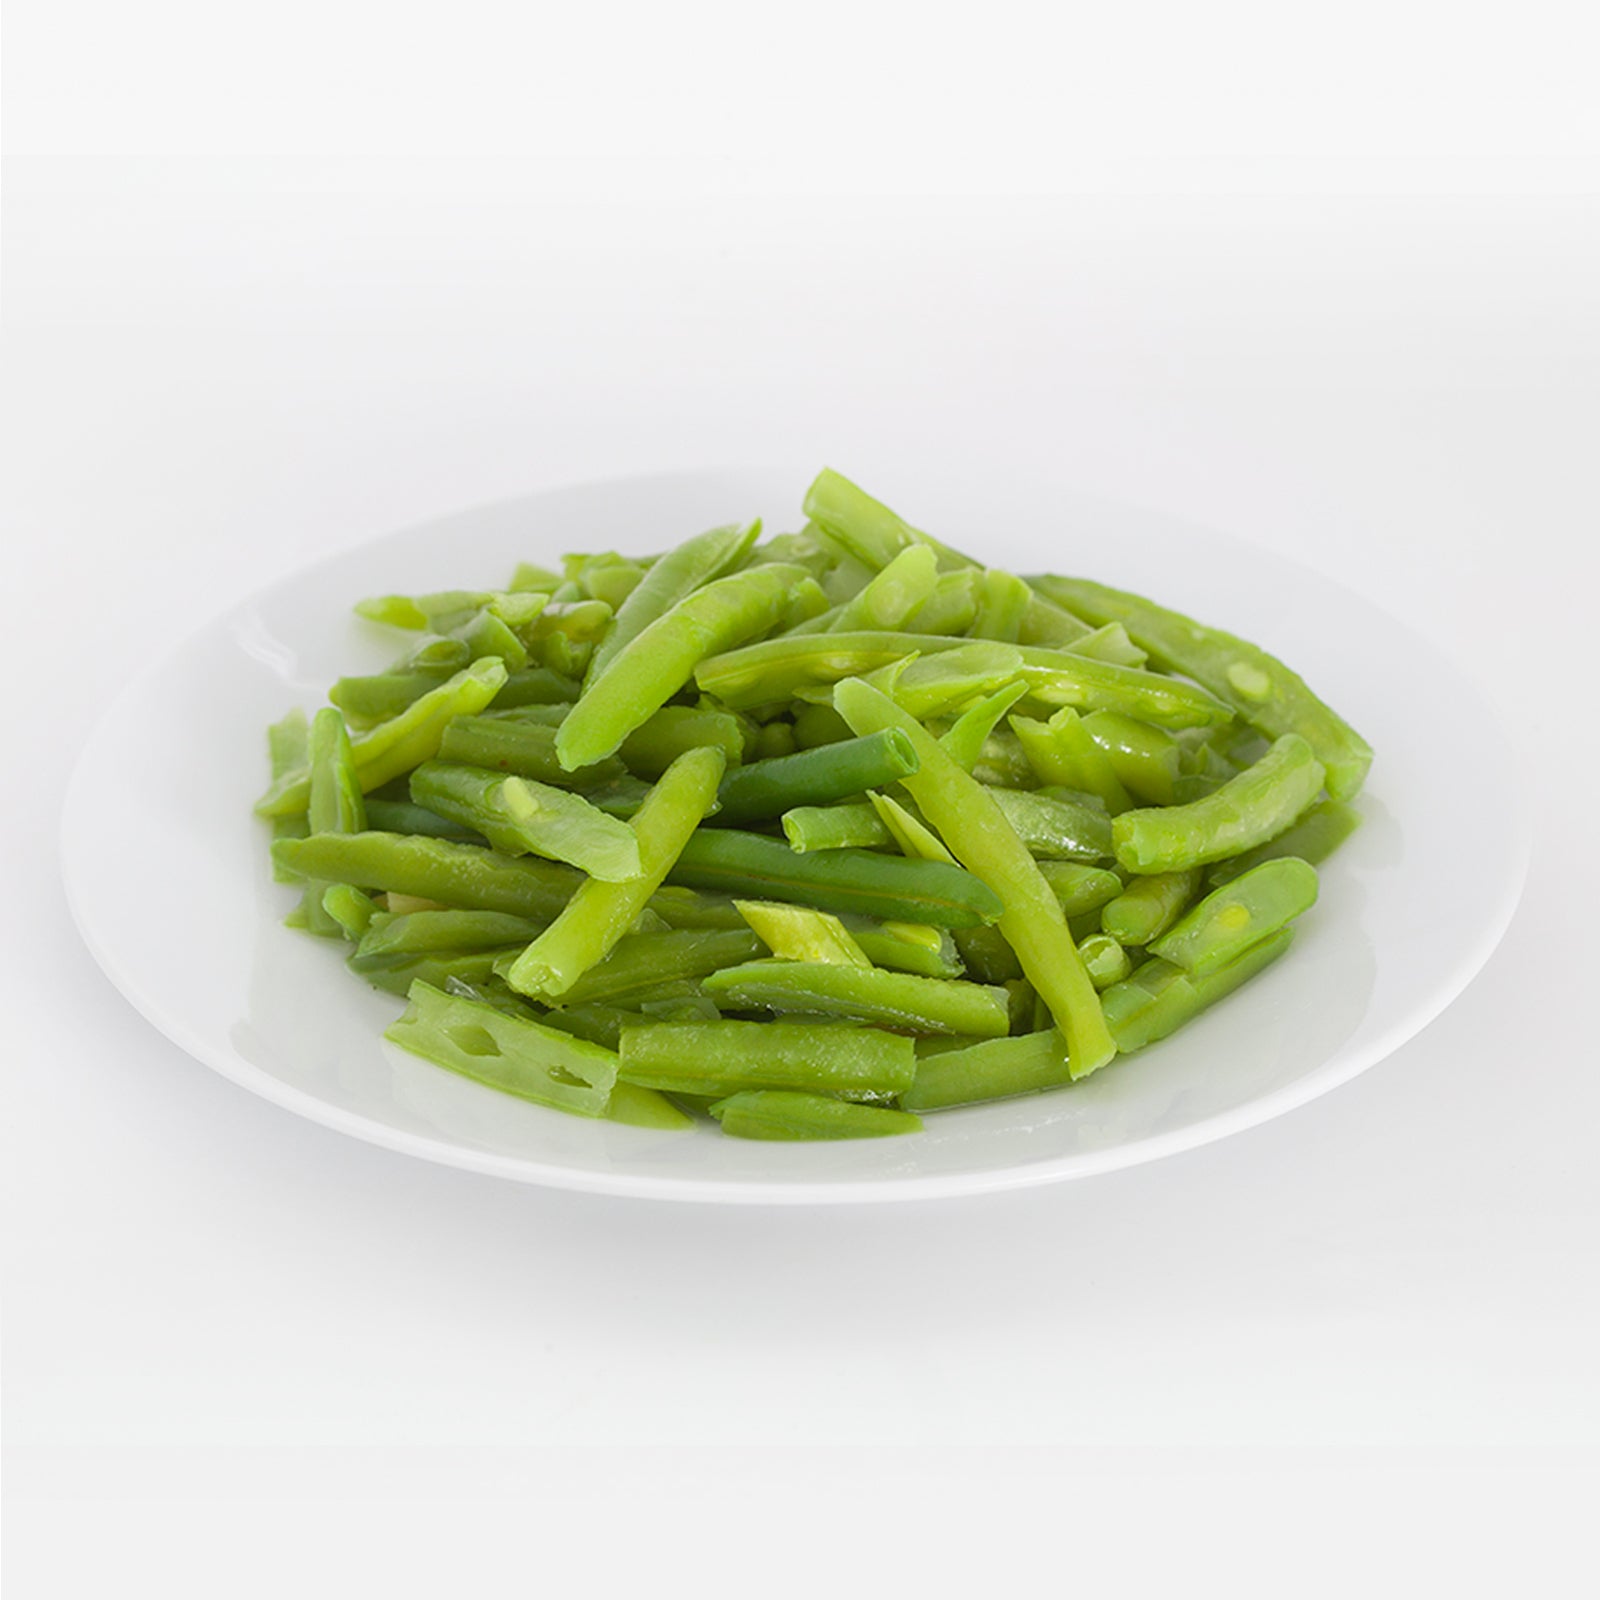 BELOW ZERO French style green beans